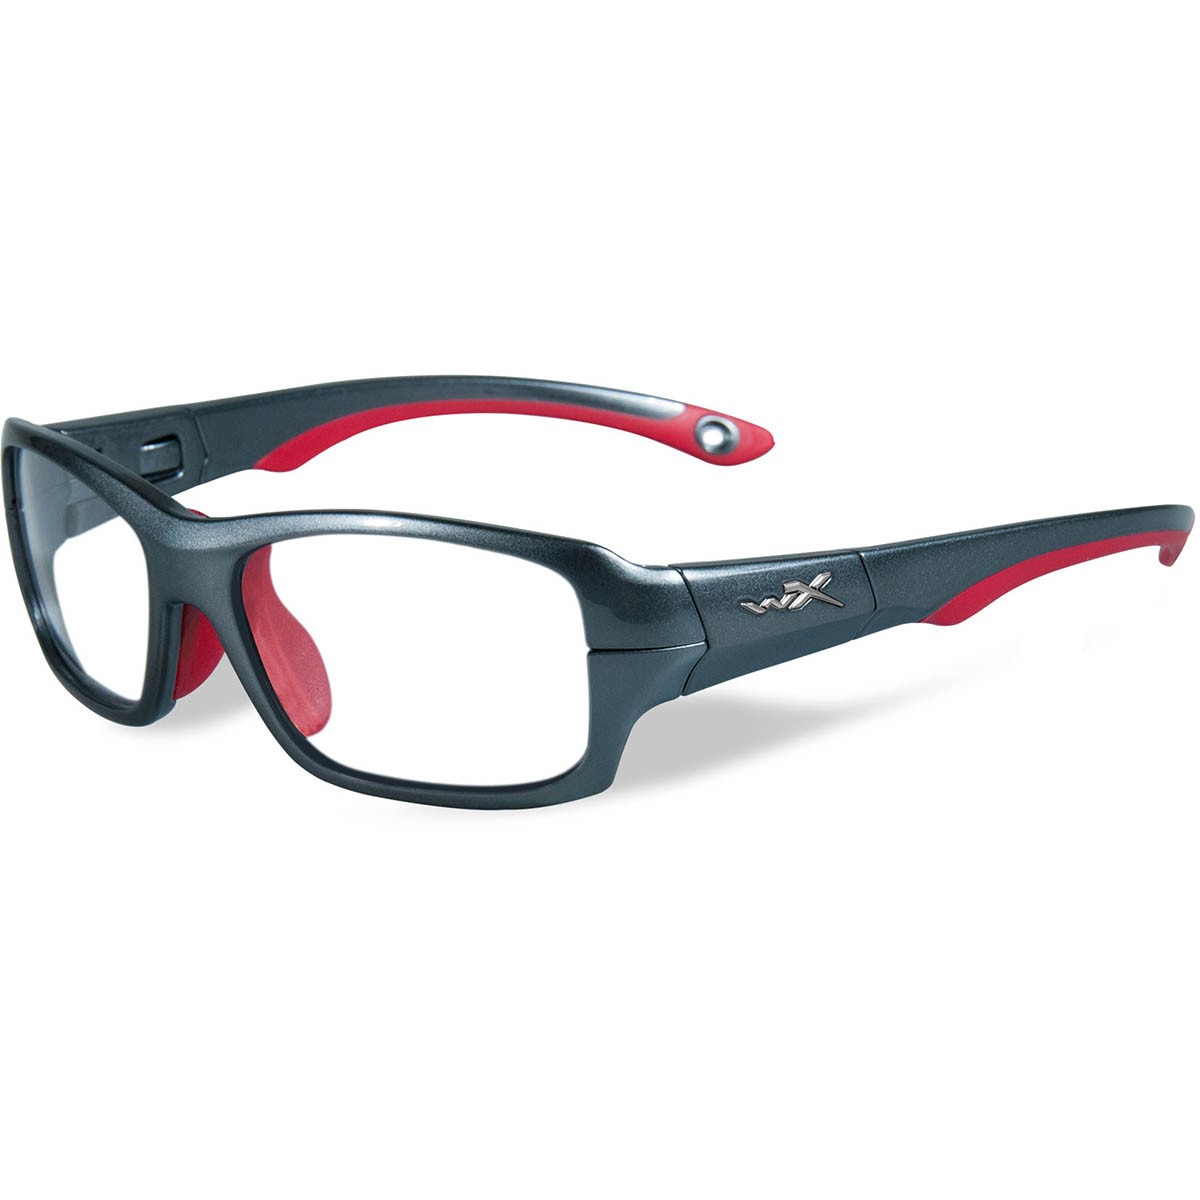 Очки Wiley-x z87. -025 Очки. Red Sport Glasses. Очки WILEYX спорт хит магазин. Очки пятерки